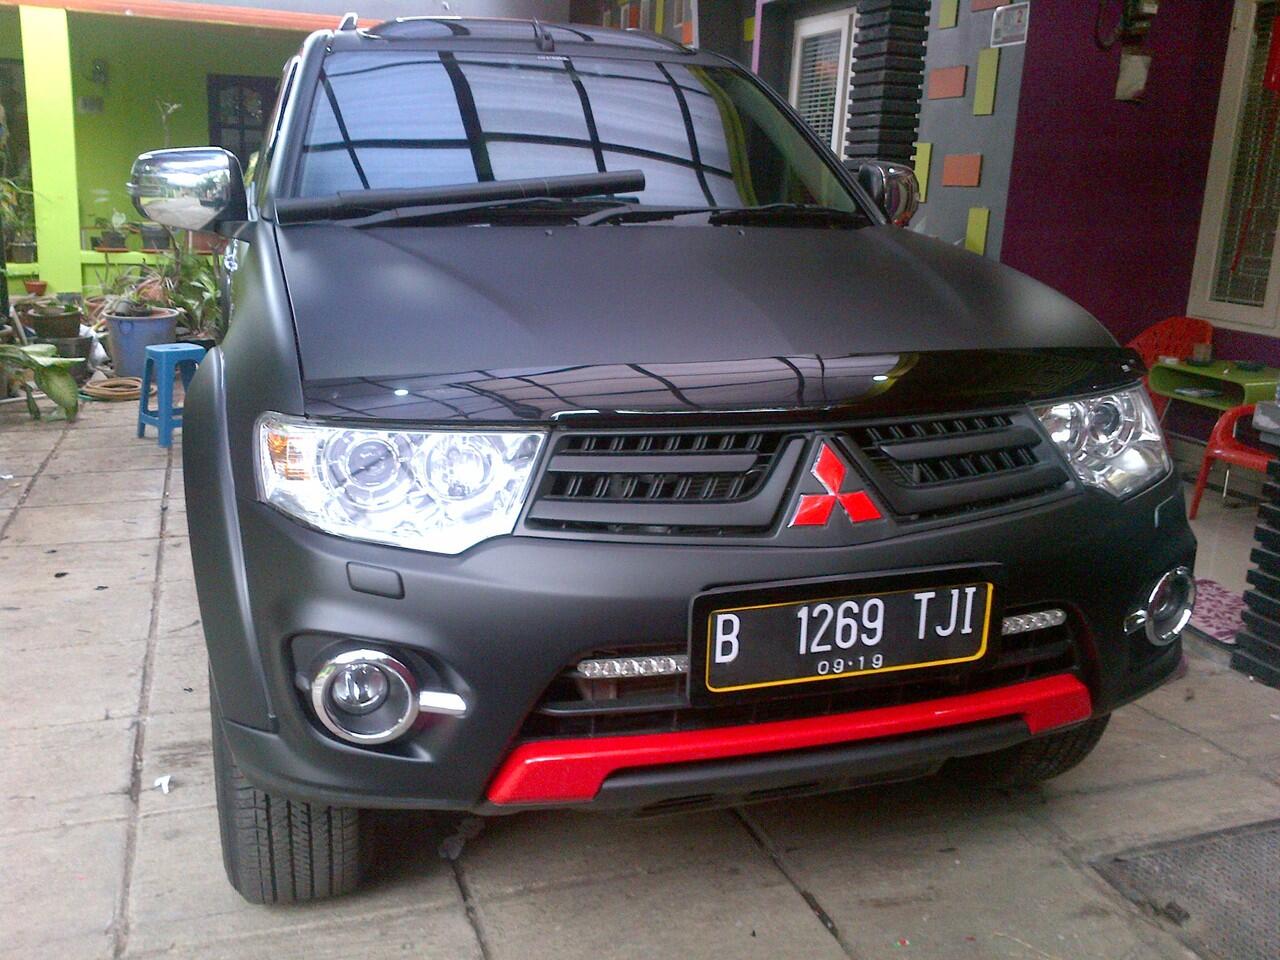 Jual Penawaran Hebooooh Sticker Mobil Khusus Tangerang Bsd